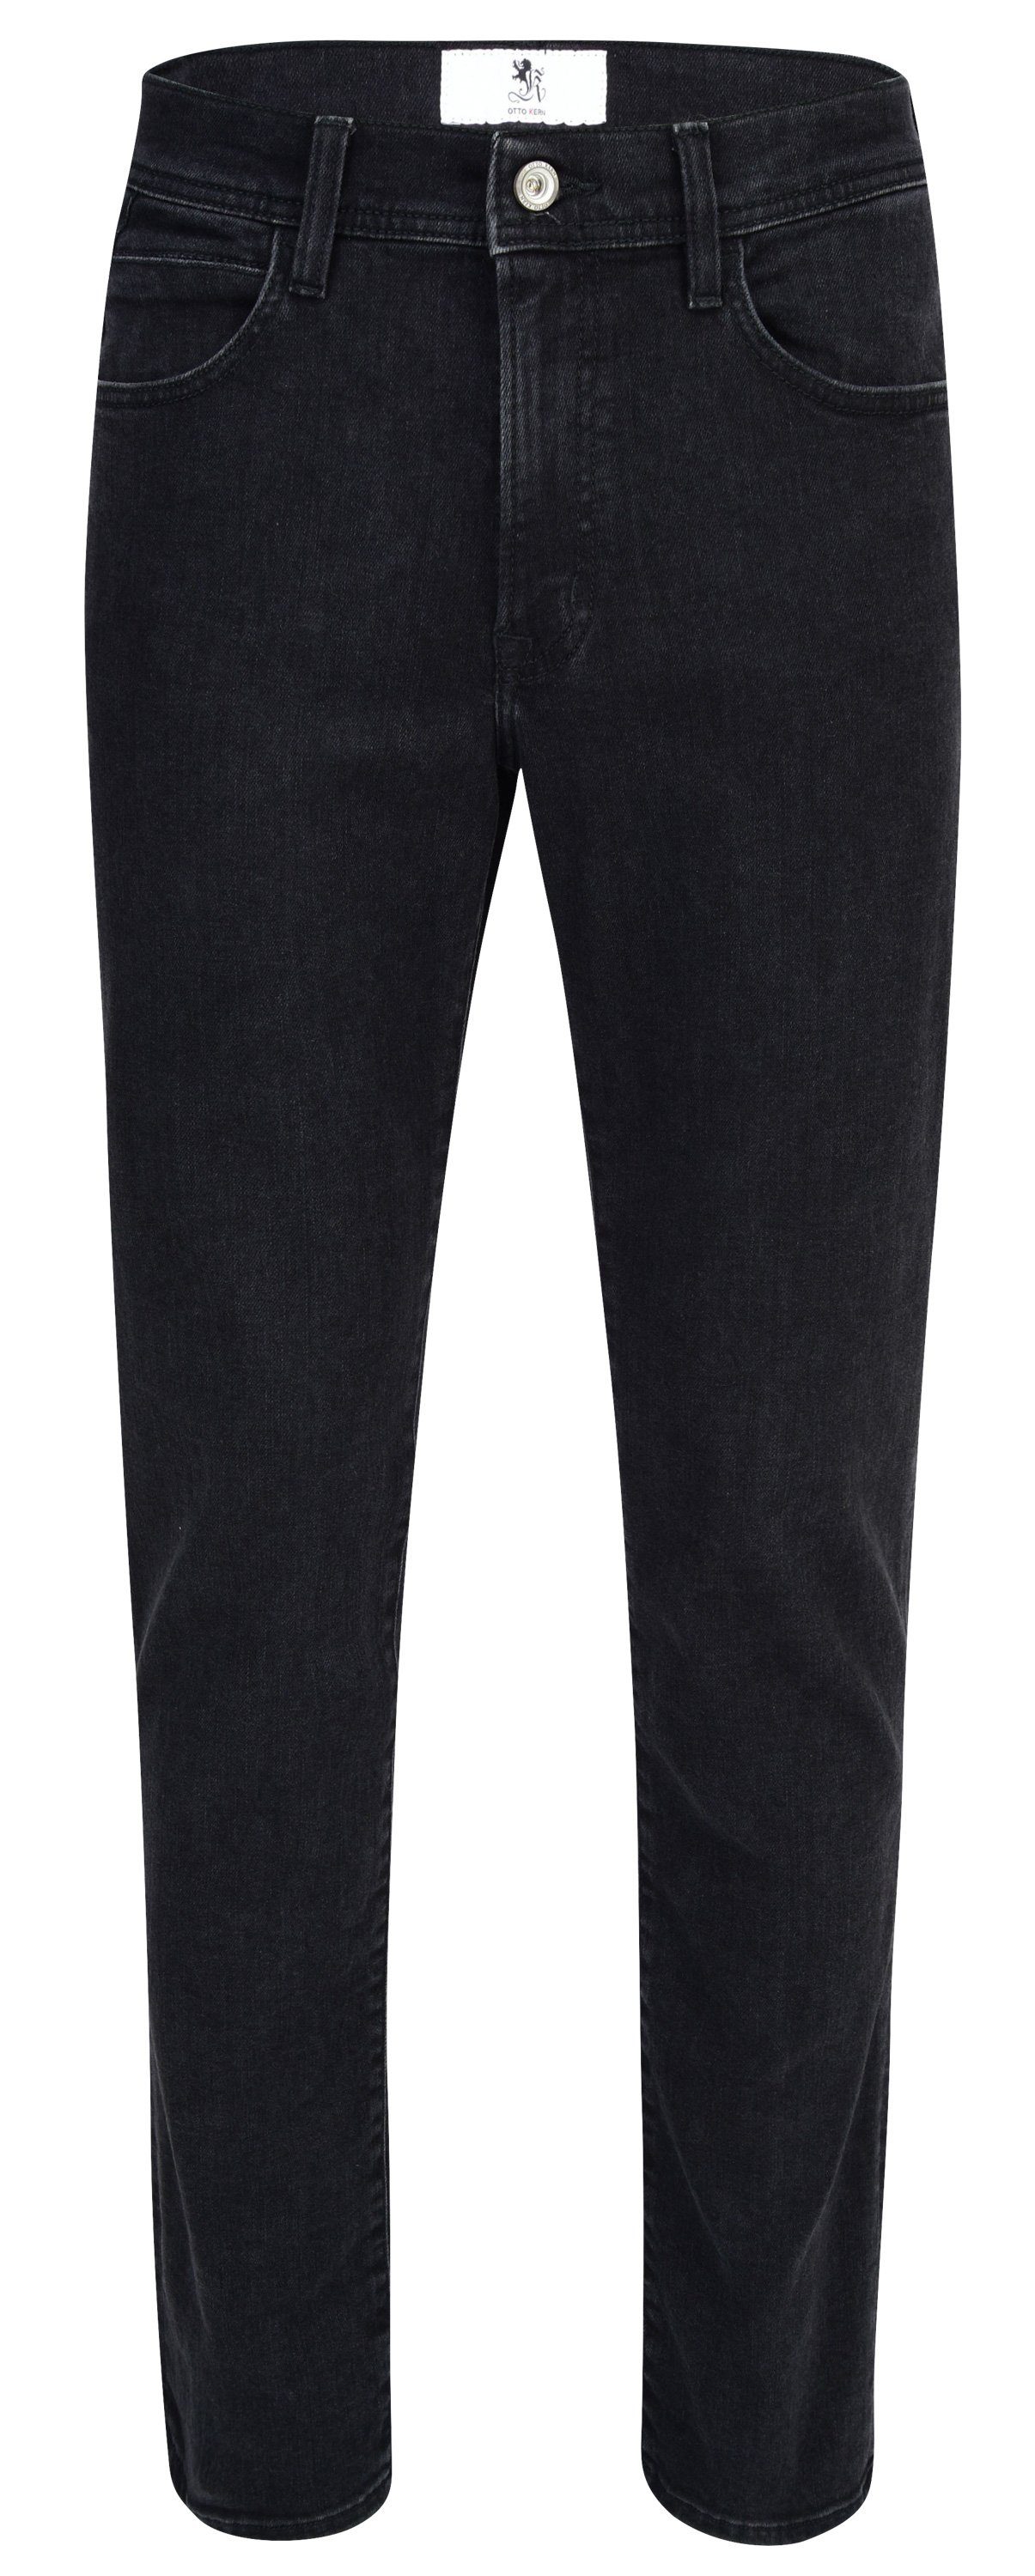 Otto Kern 5-Pocket-Jeans OTTO KERN JOHN black black stonewash 67043 6812.9801